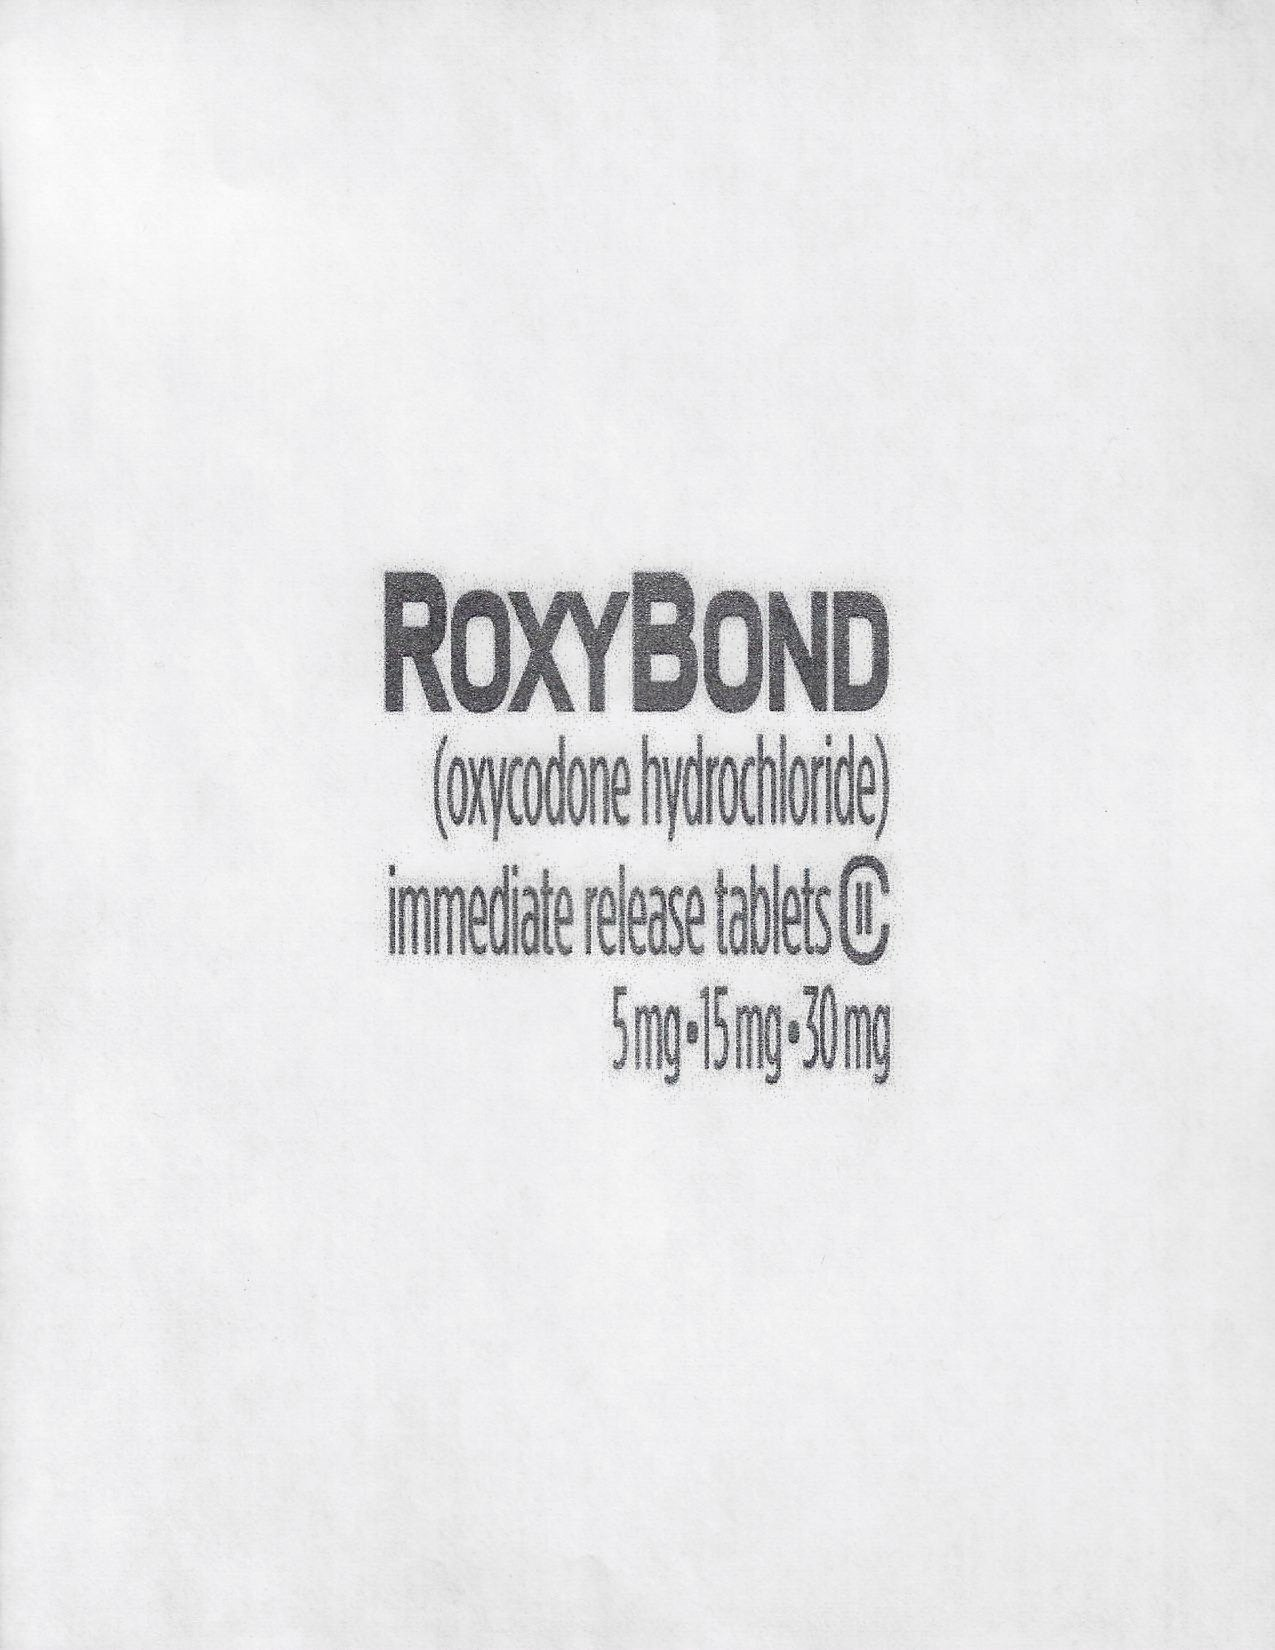  ROXYBOND (OXYCODONE HYDROCHLORIDE) IMMEDIATE RELEASE 5 MG 15 MG 30 MG